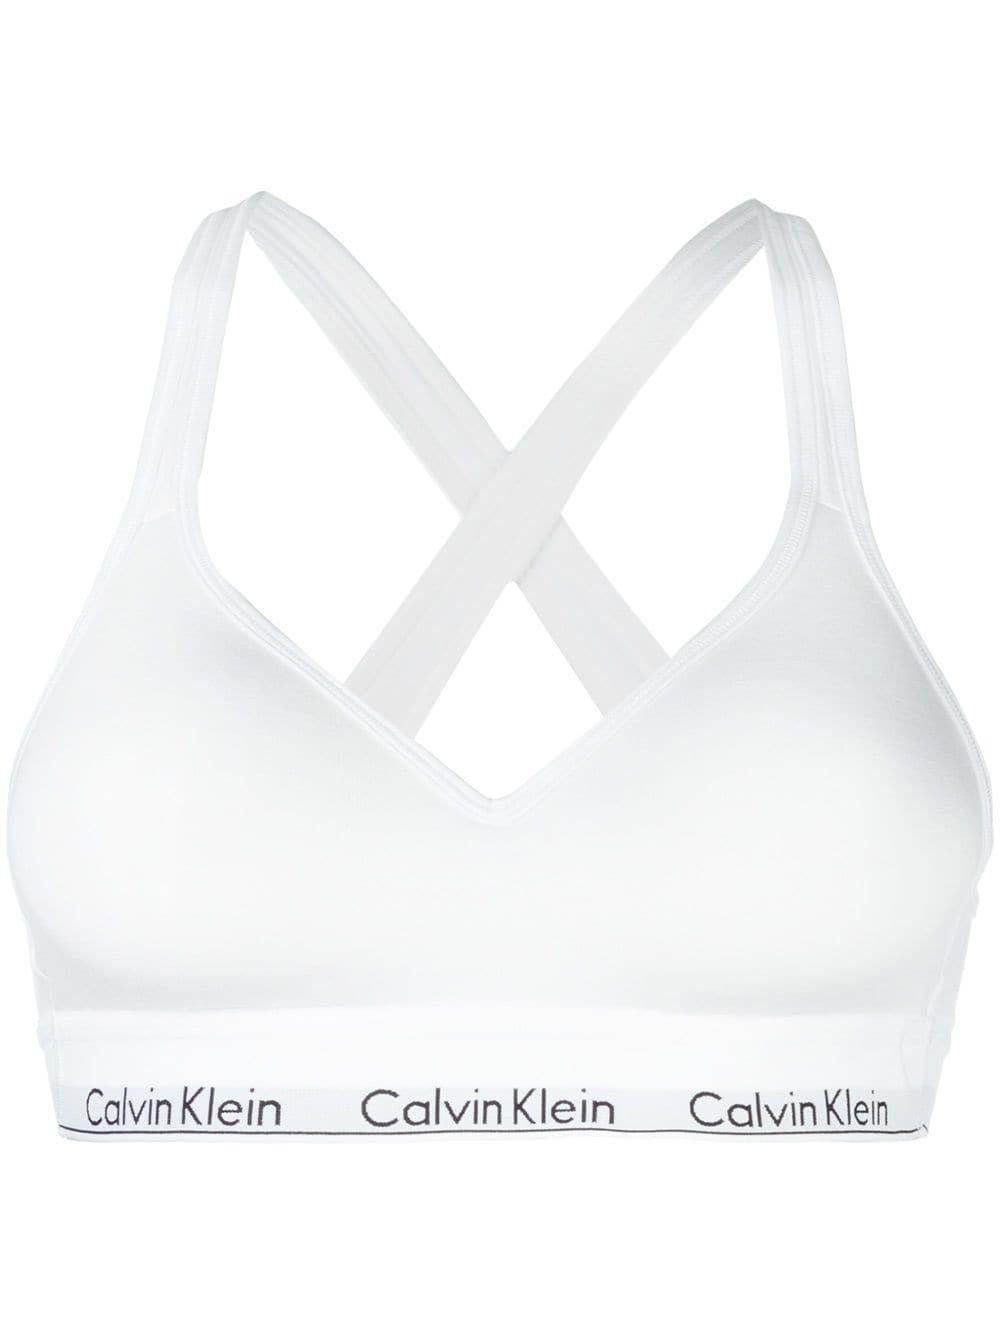 Calvin Klein Women's White Bras